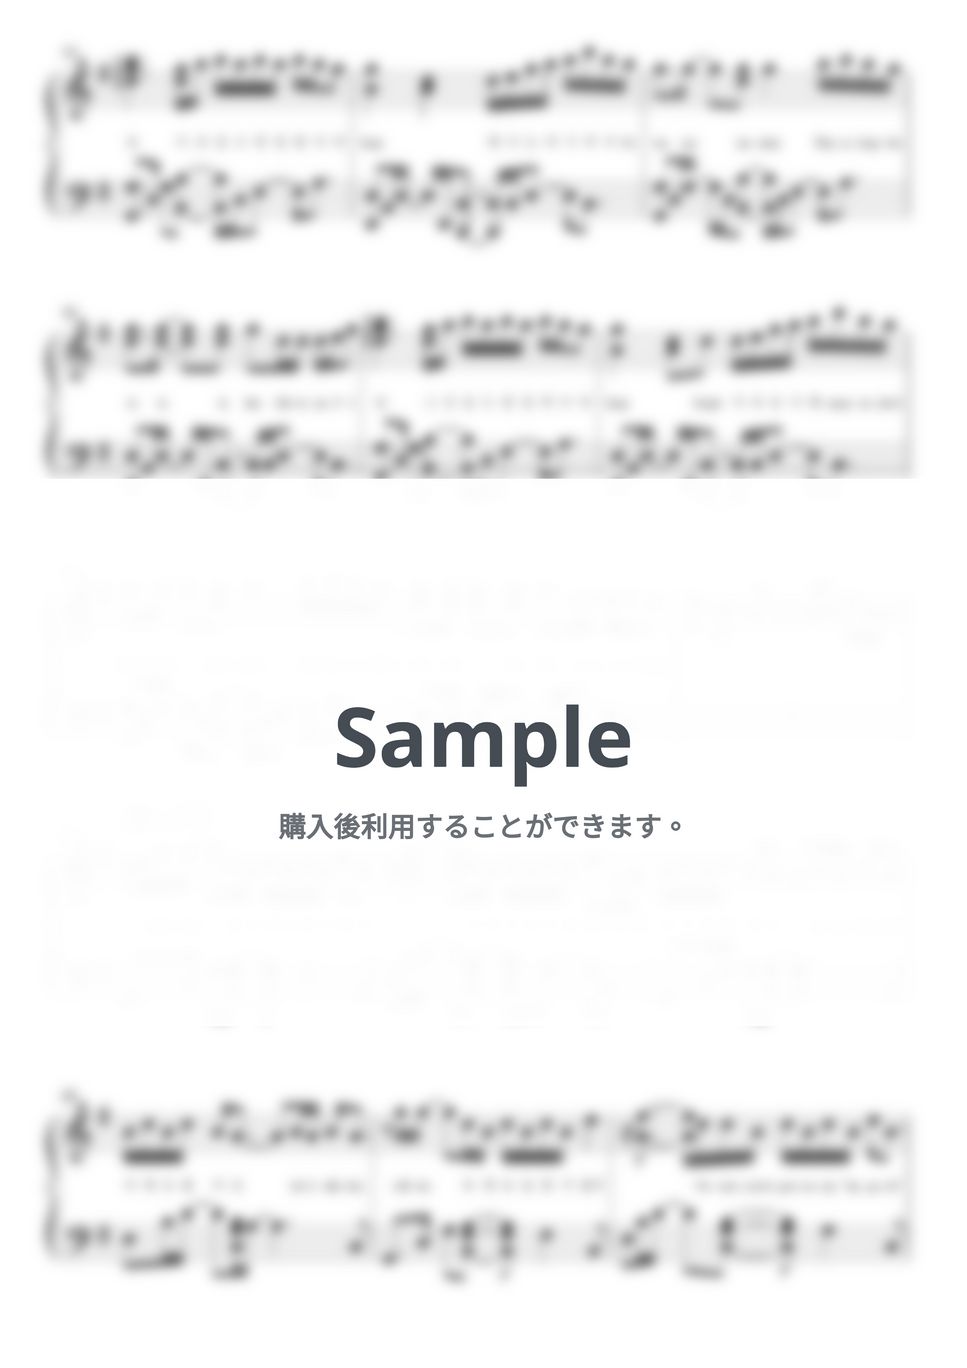 IU(아이유) - BBIBBI(삐삐) (PIANO COVER) by HANPPYEOMPIANO